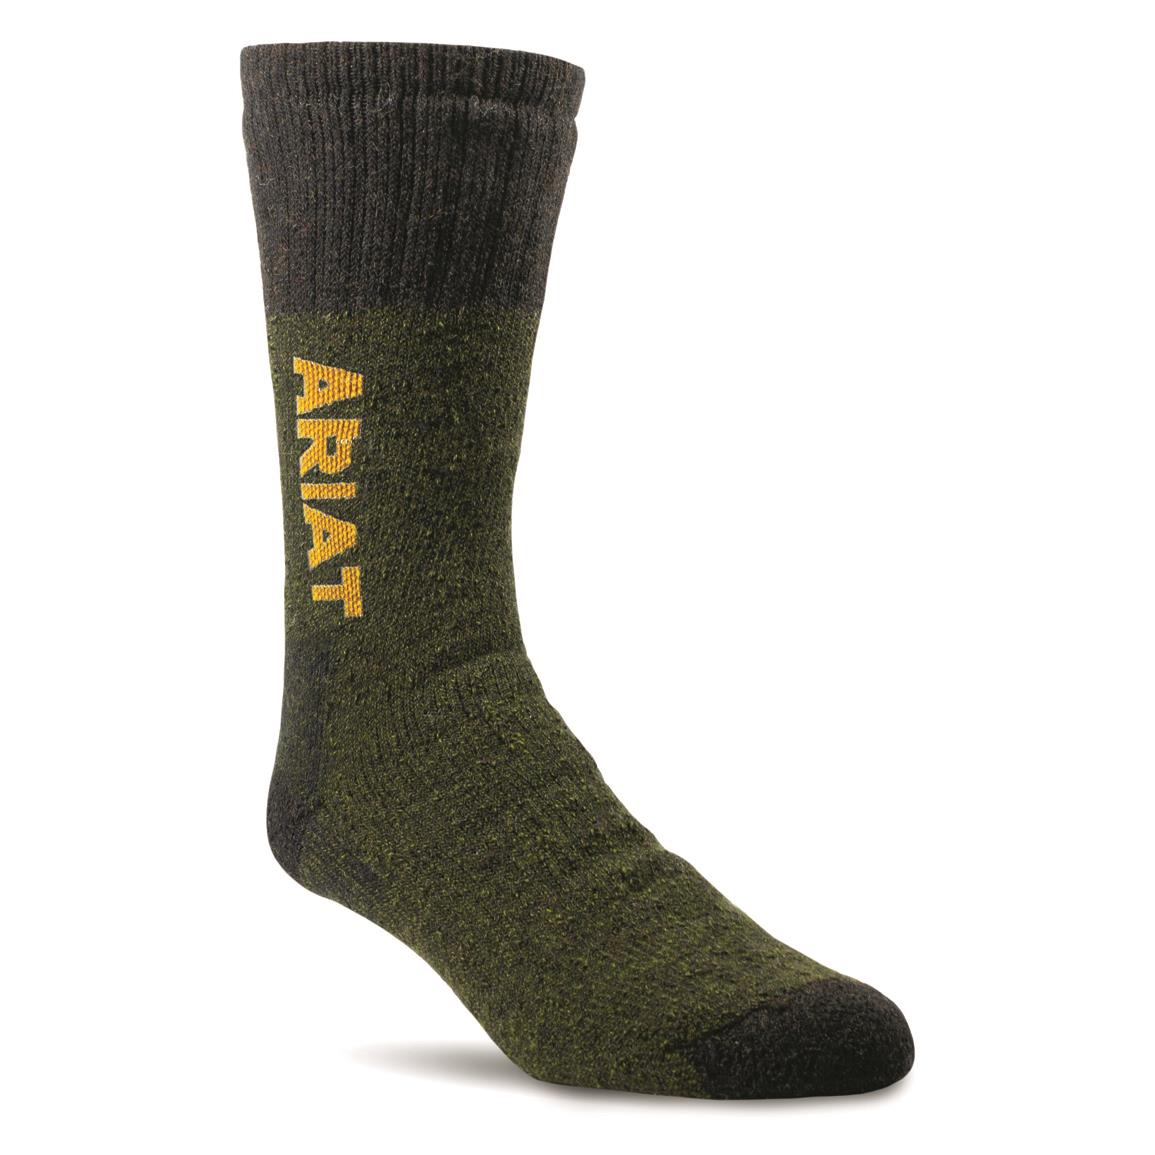 Ariat Marl Thermal Crew Socks, 2 Pairs, Olive